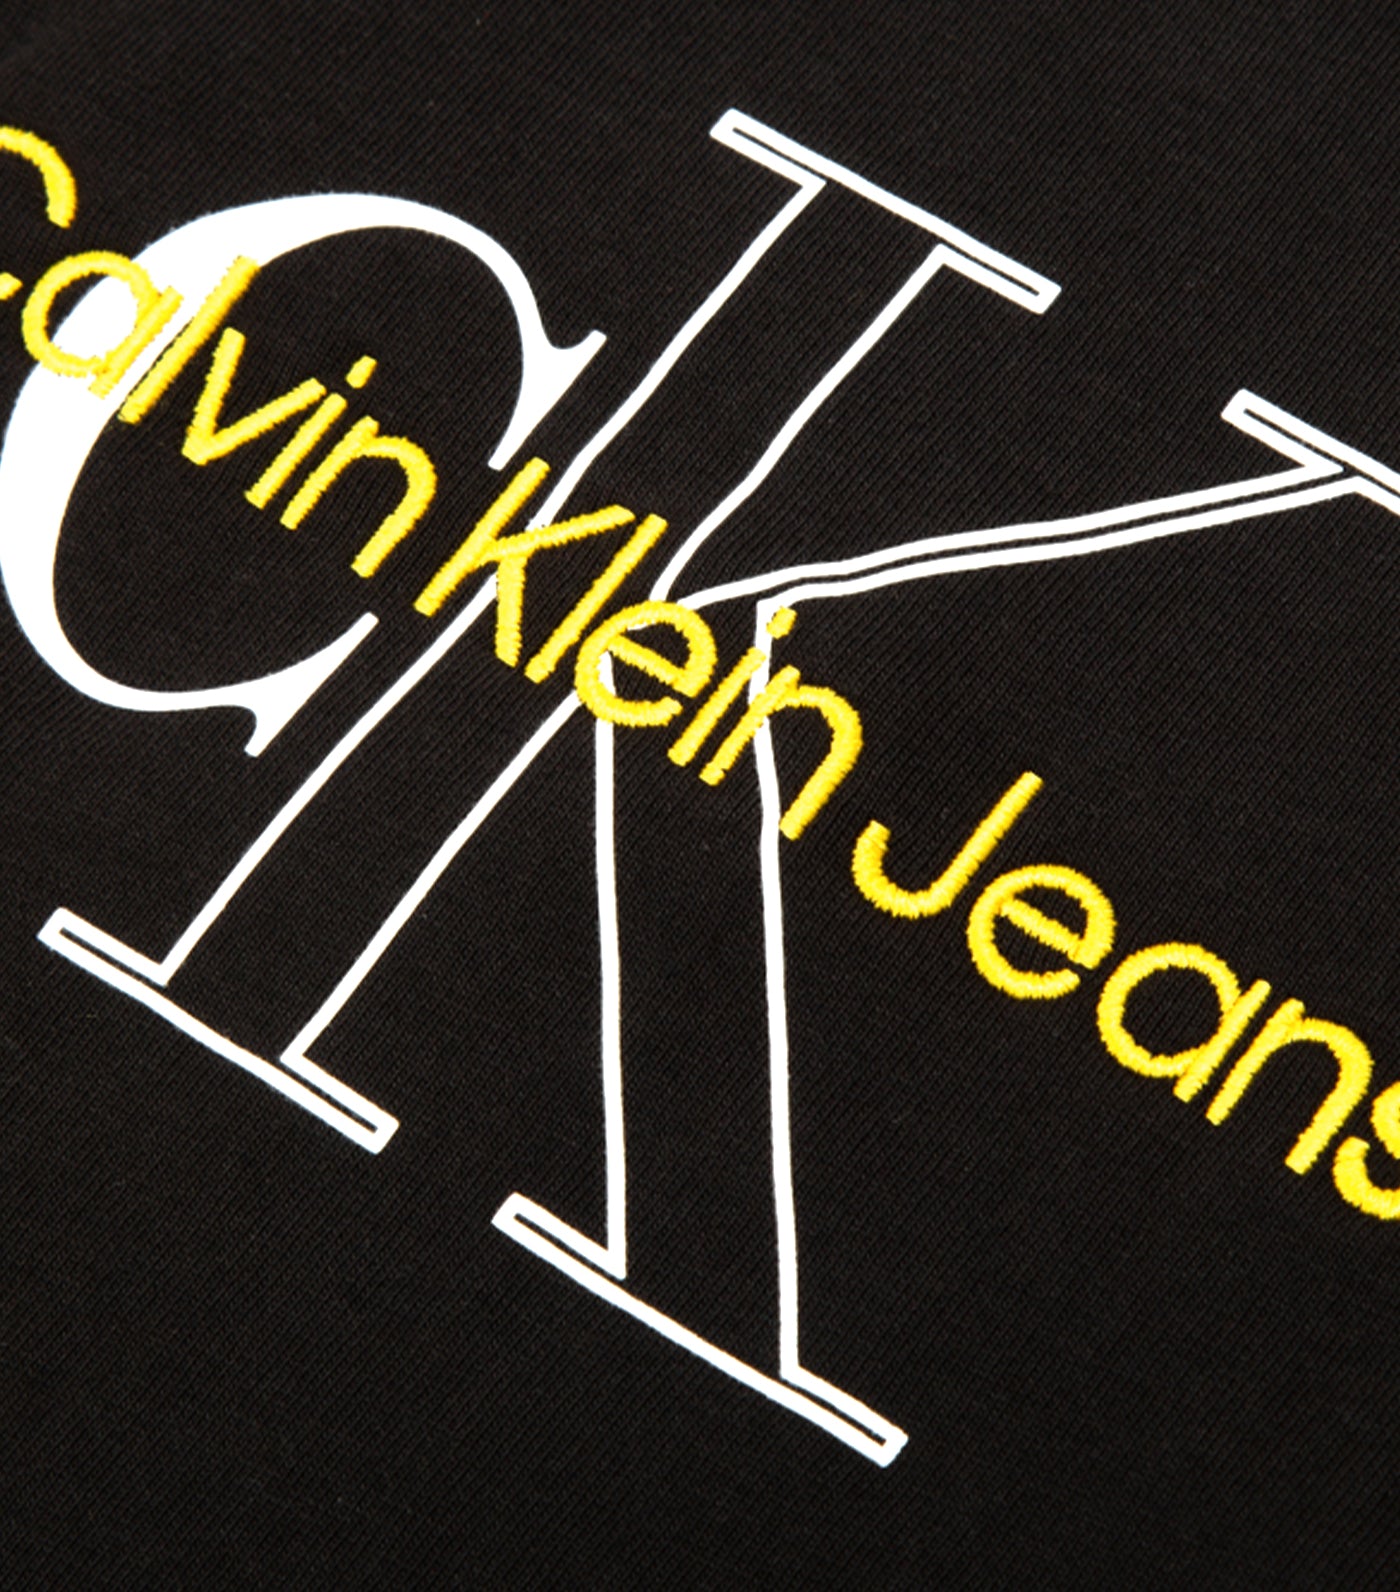 Calvin Klein Jeans Logo Tee Fashion Fit Multicolor